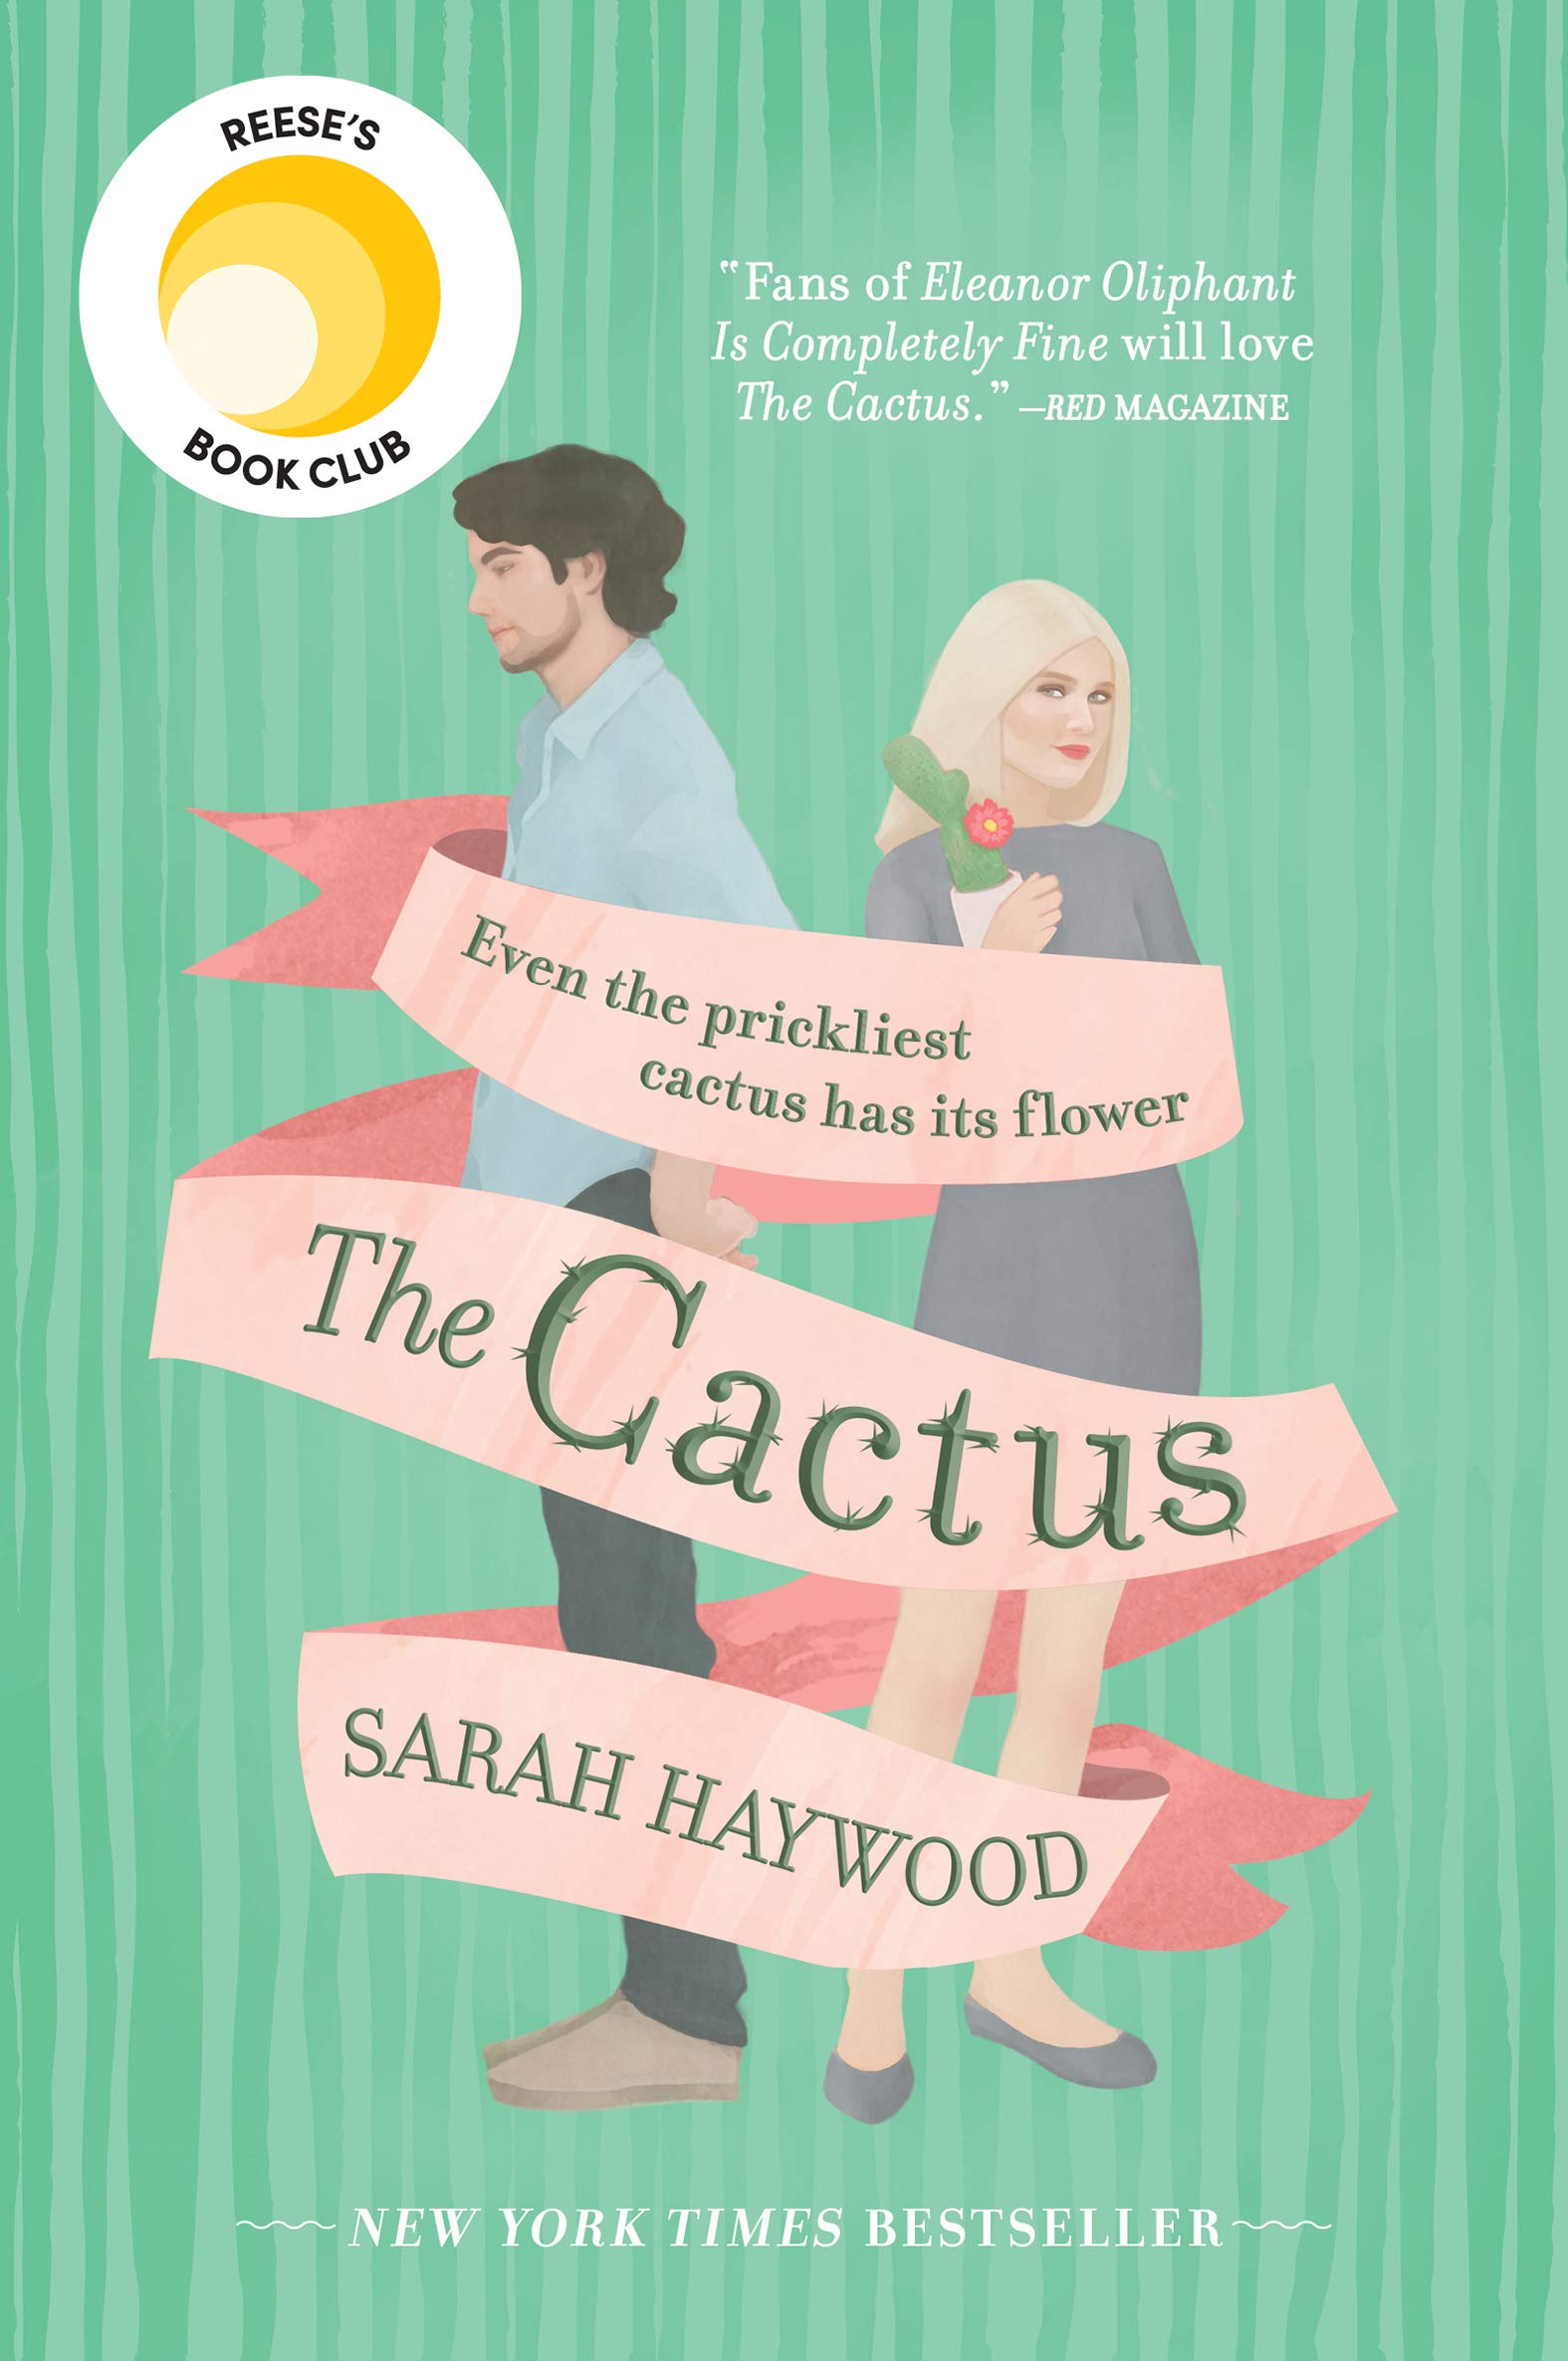 The Cactus: A Novel